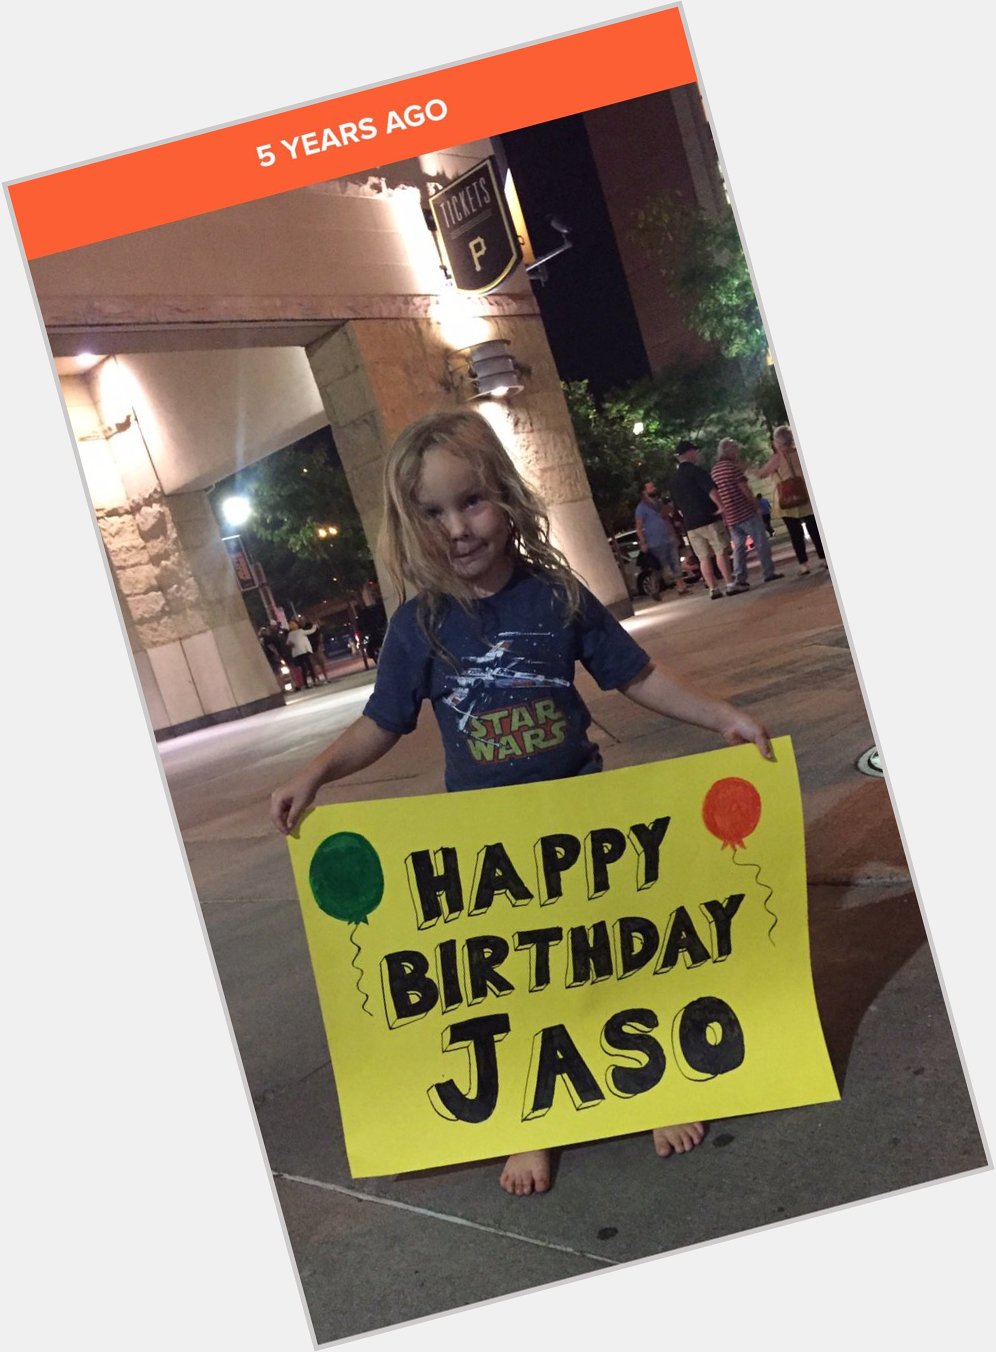 Happy Birthday to John Jaso!!! 